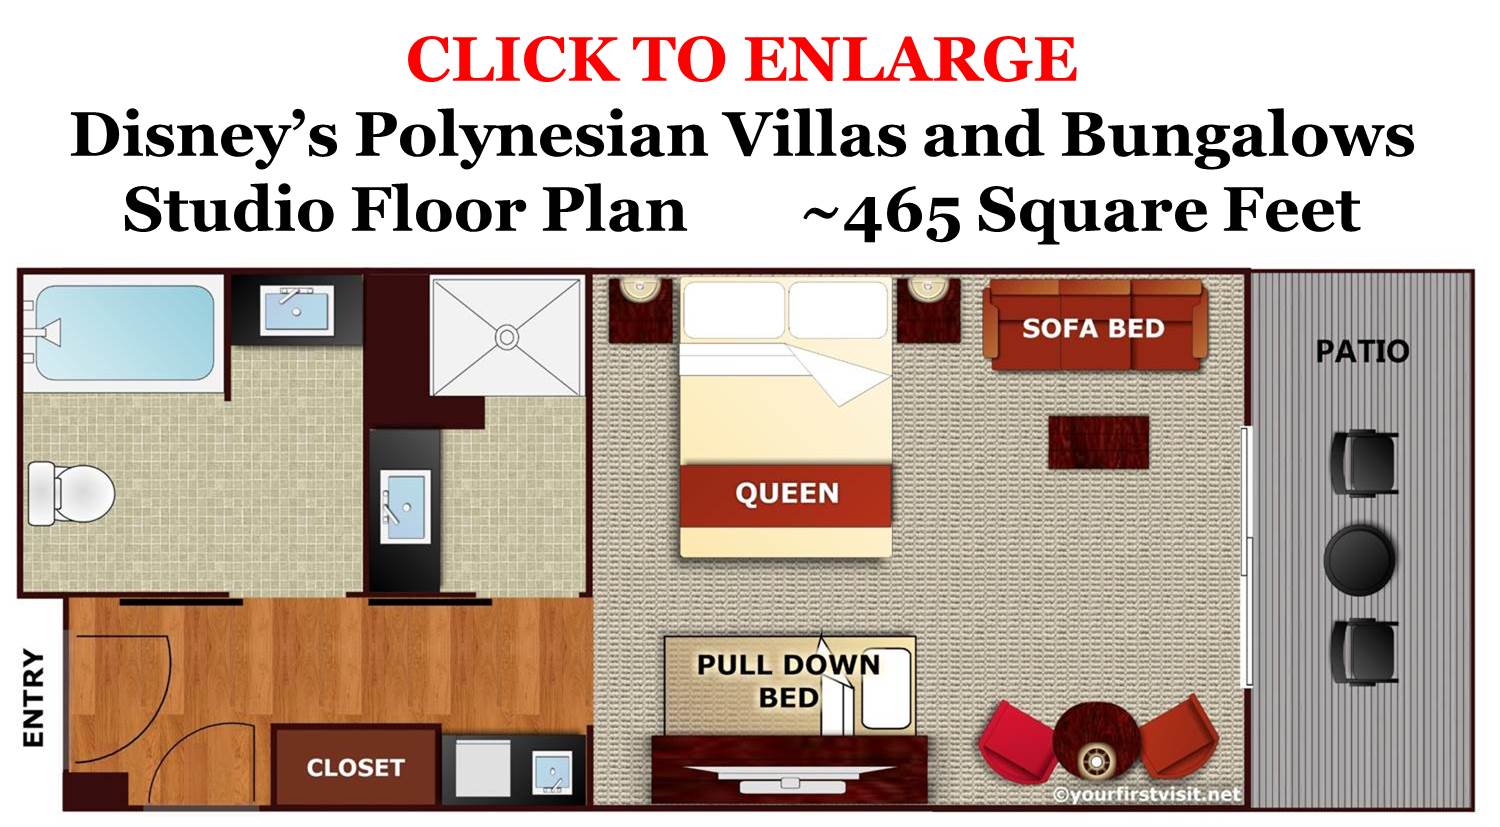 Studio-Floor-Plan-Disneys-Polynesian-Villas-and-Bungalows-from-yourfirstvisit.net_1.jpg